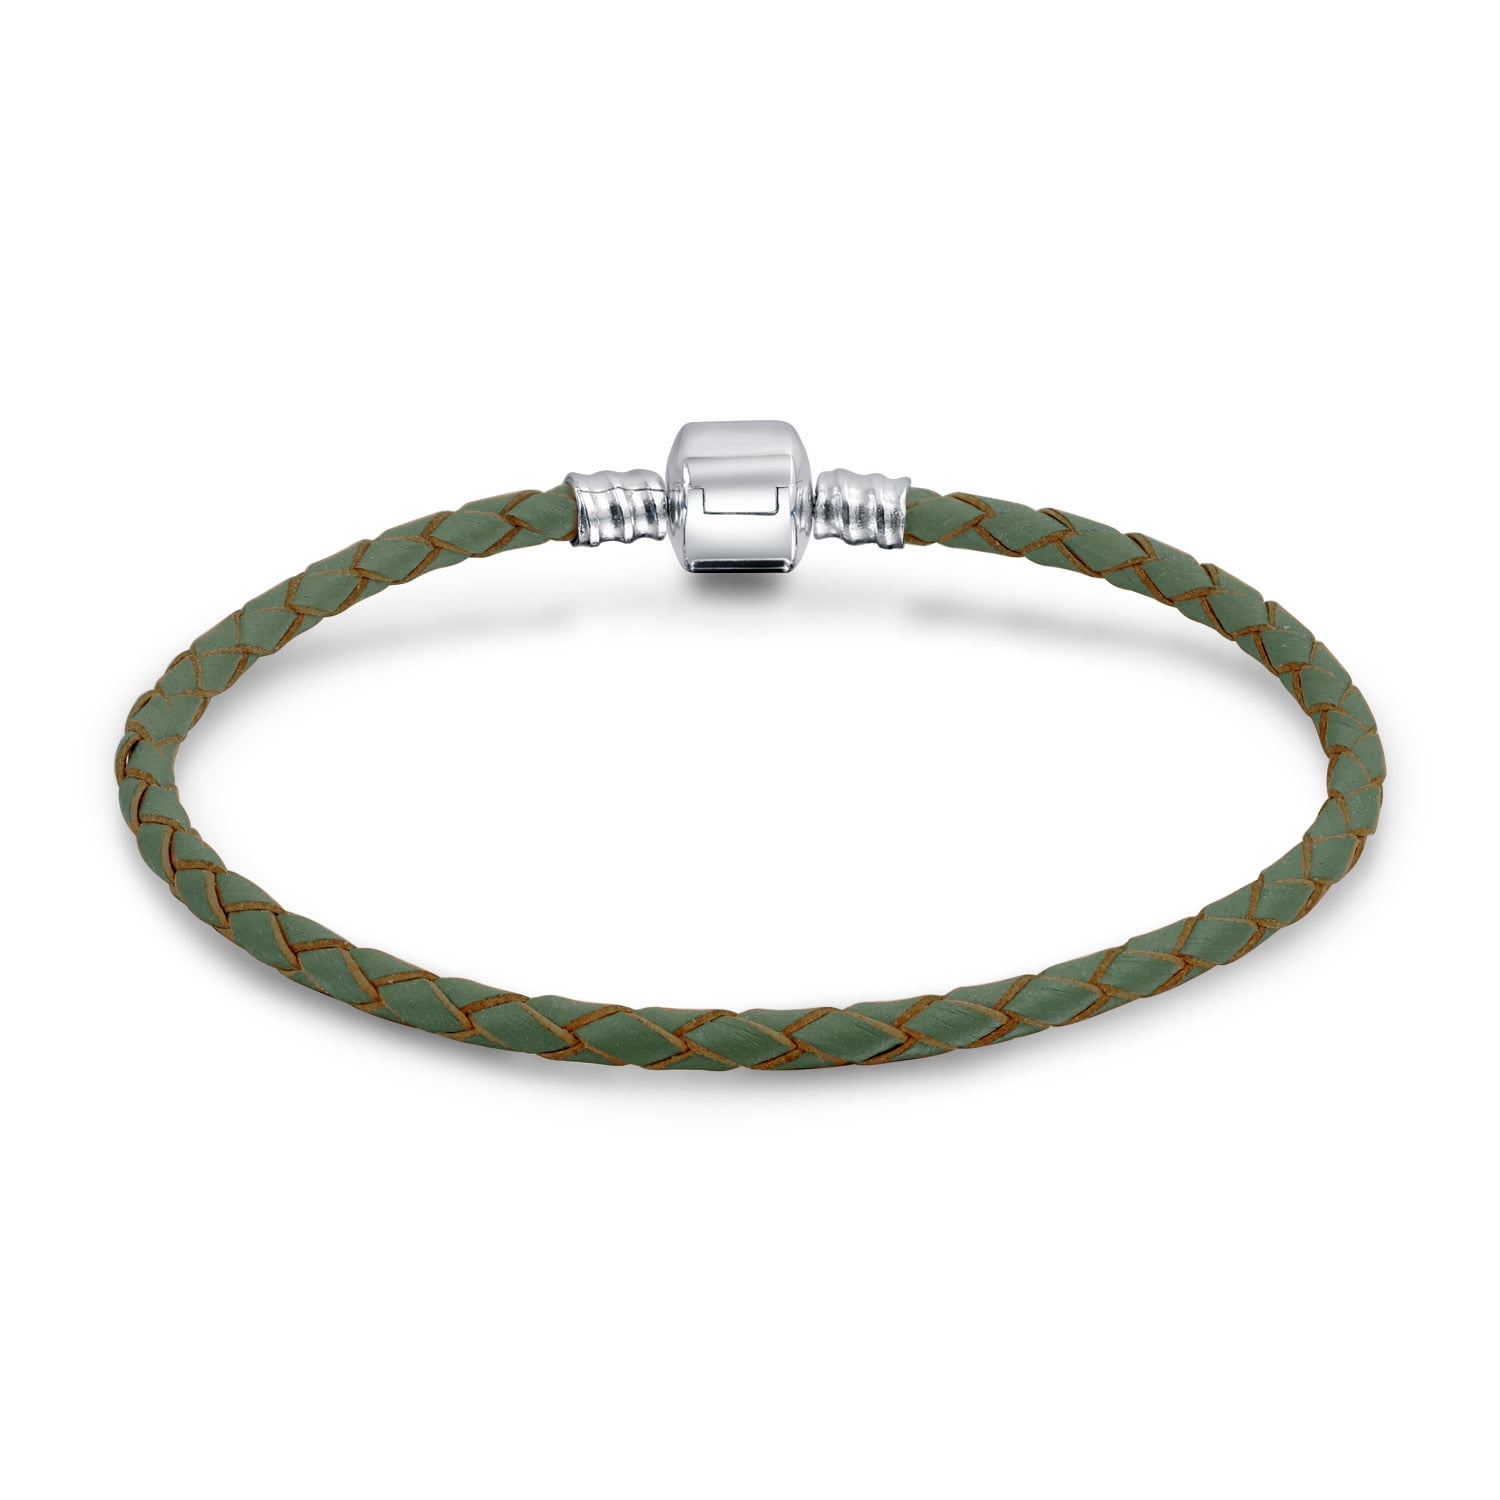 JAJAFOOK Bracelet Snap Clasp Style Bangle Sterling Silver Elk Leather Rope Bracelet Charms Beads Ideal